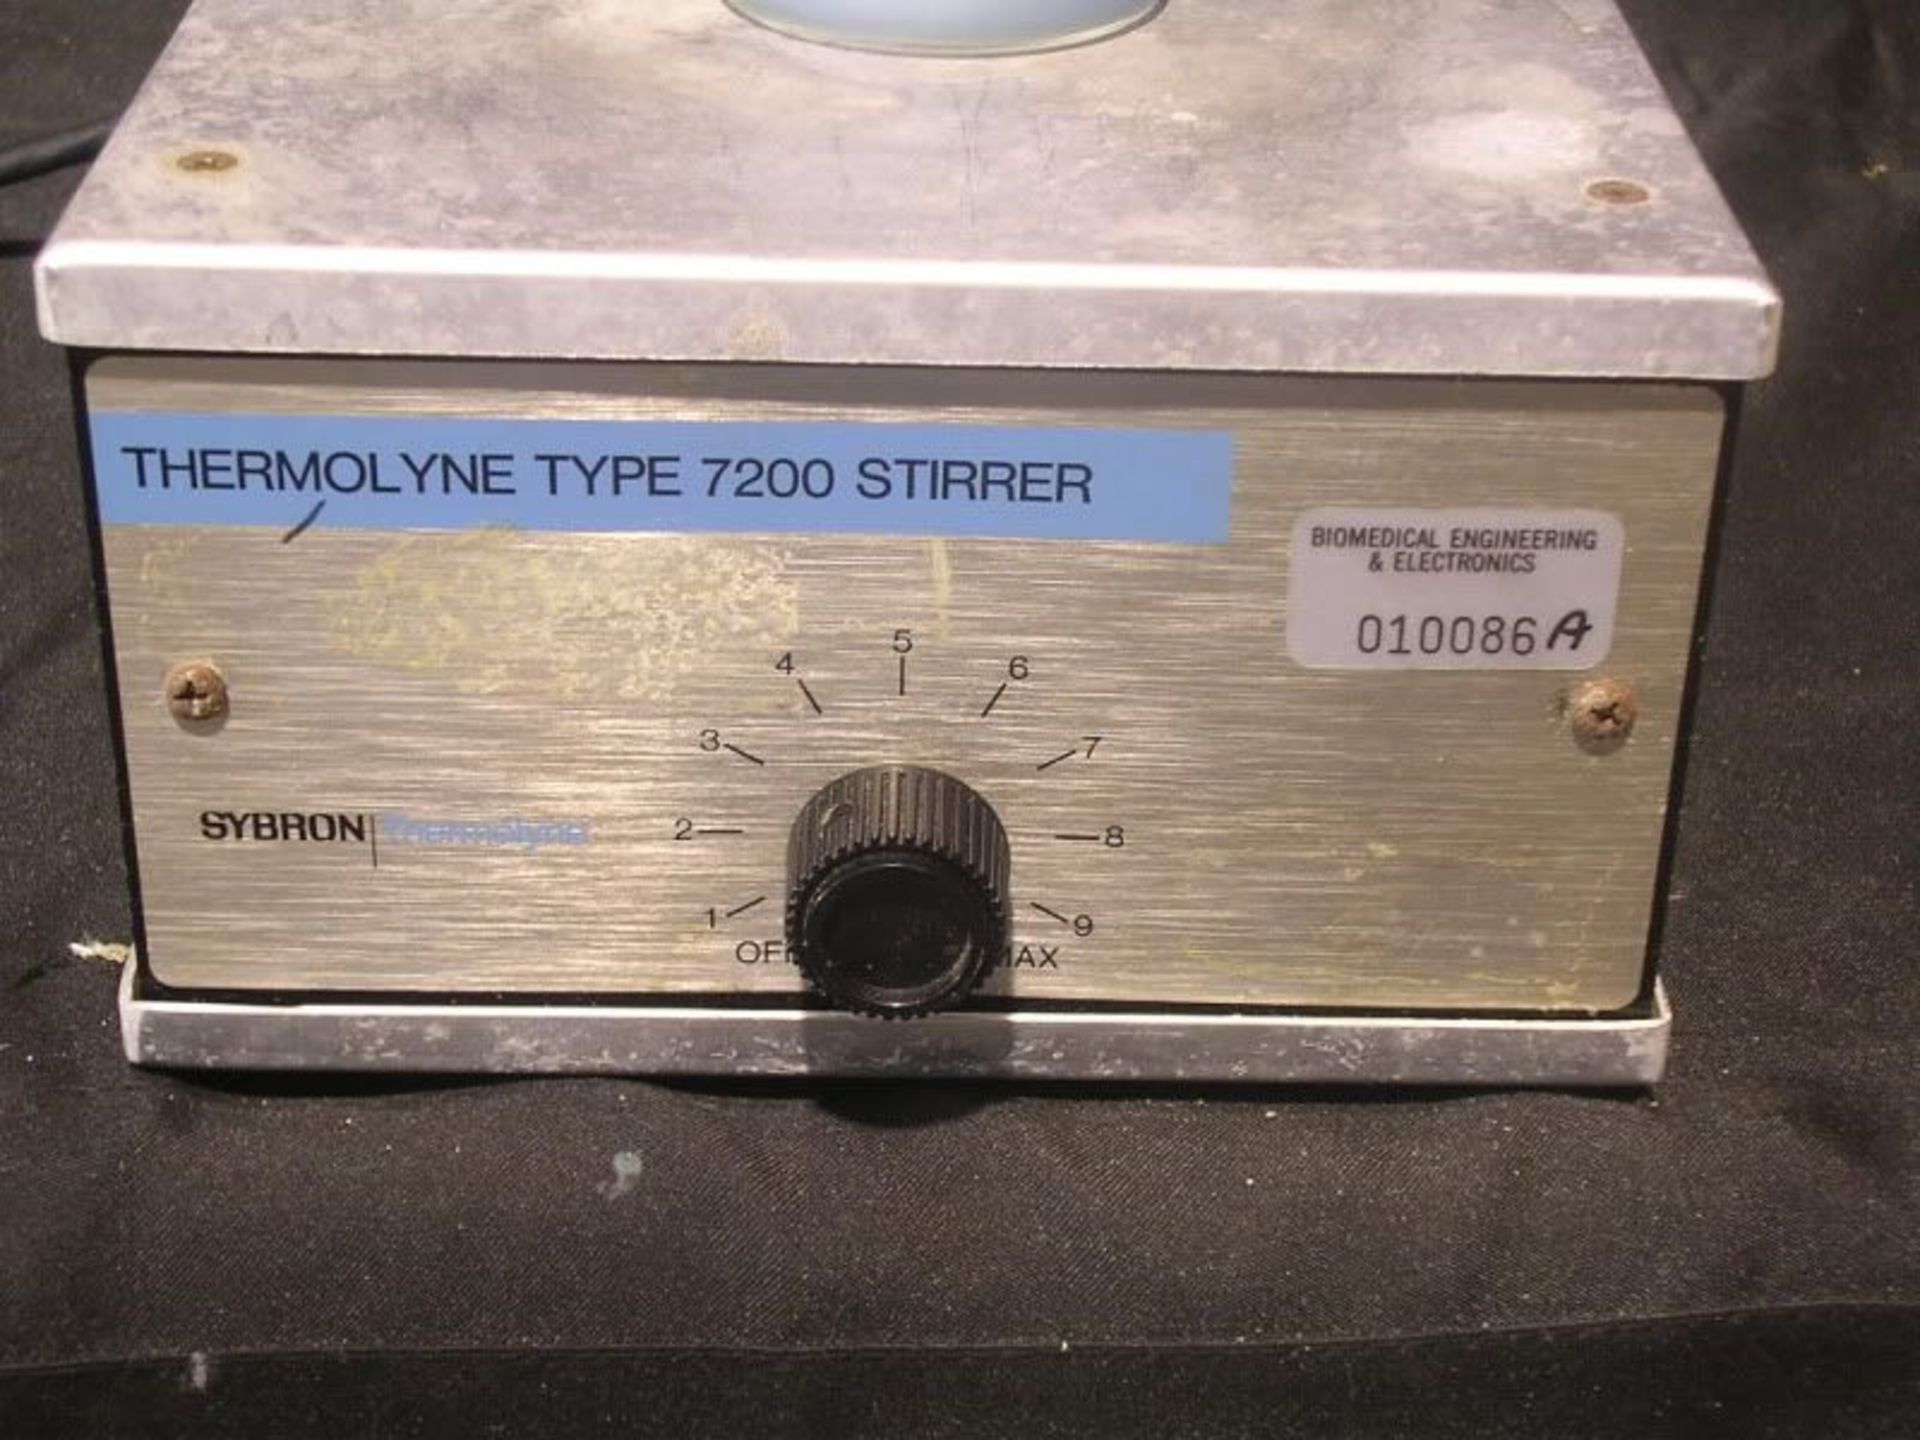 Sybron/Thermolyne Type 7200 Stirrer, Qty 1, 320799179149 - Image 2 of 6